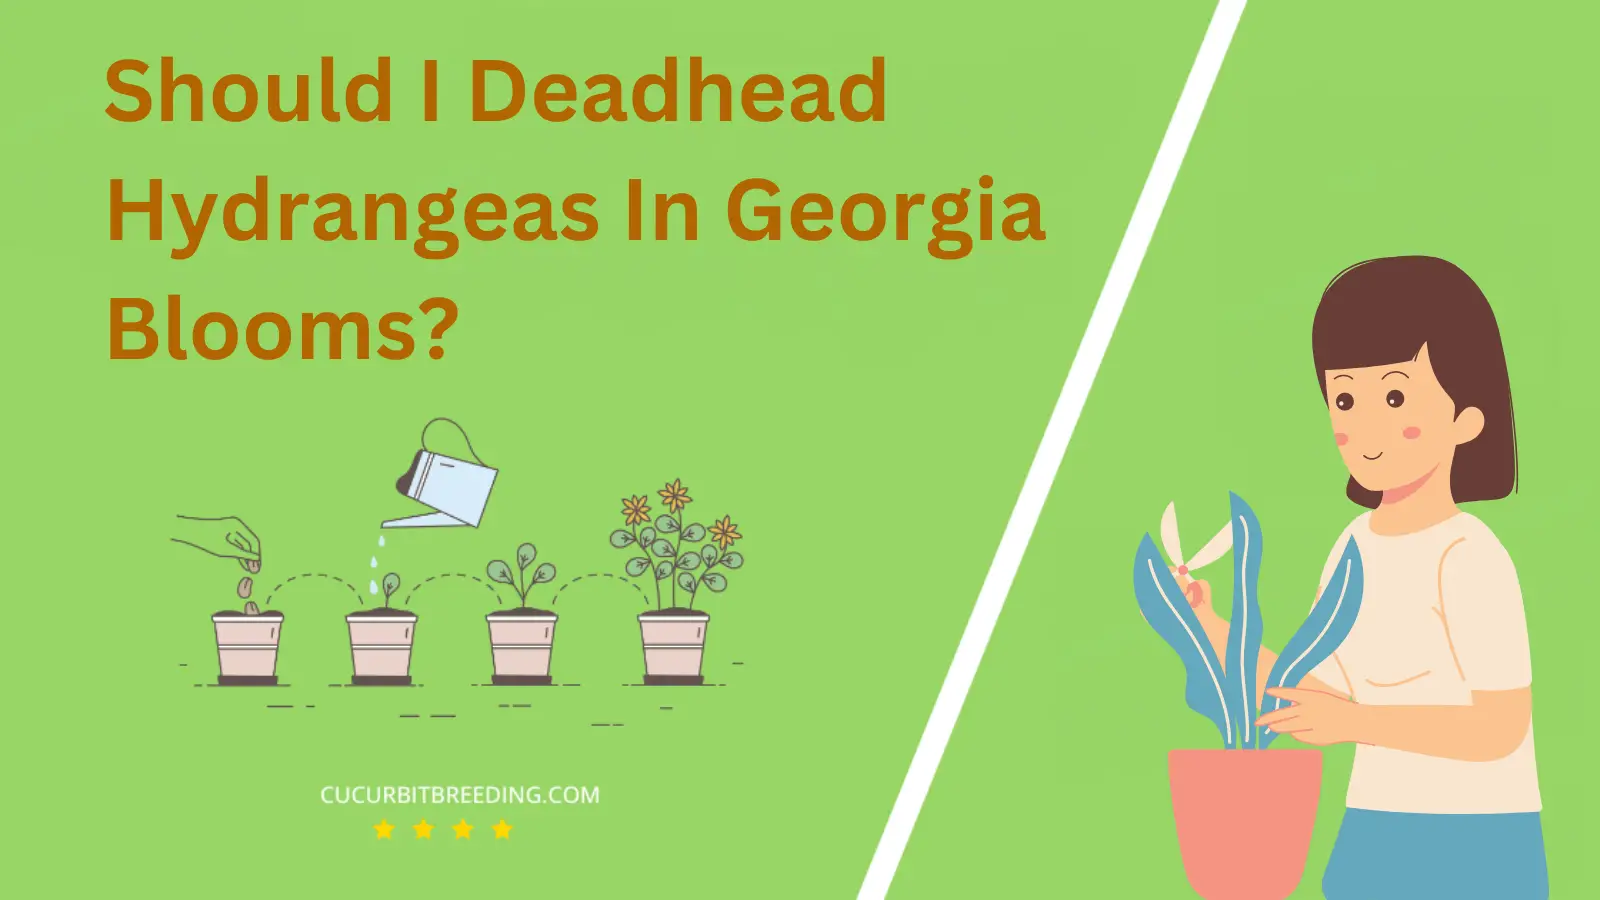 Should I Deadhead Hydrangeas In Georgia Blooms?